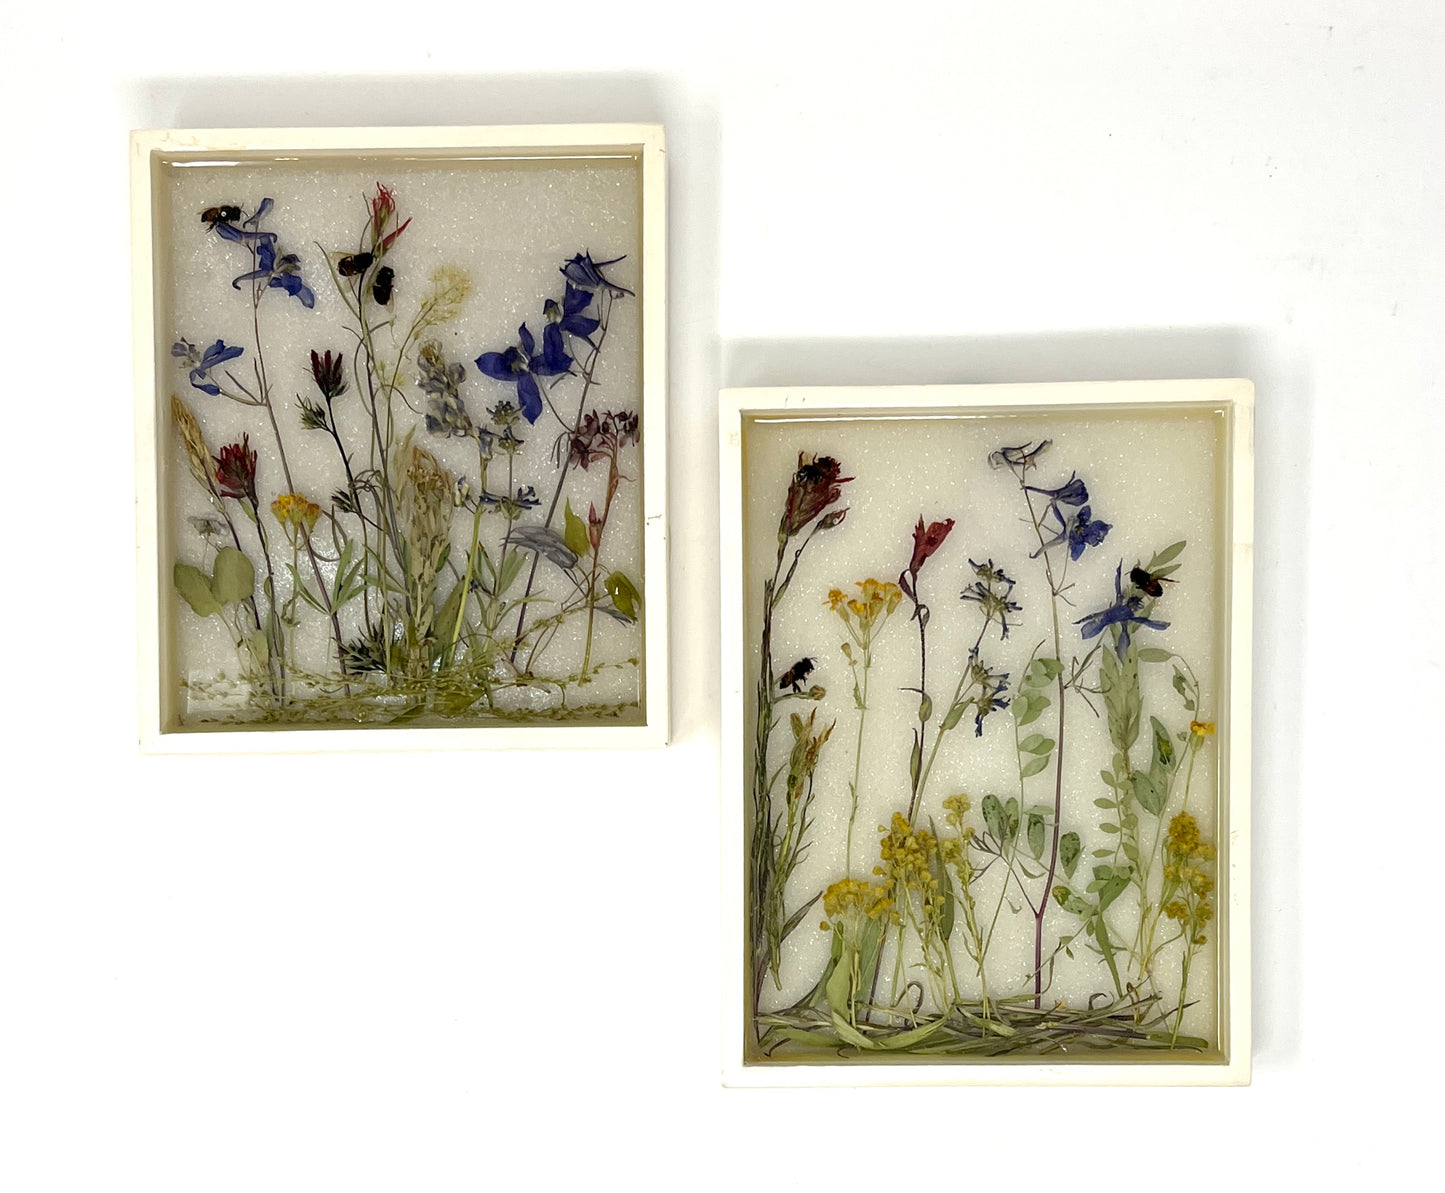 Julianna Lovasz: Small Flower Frame